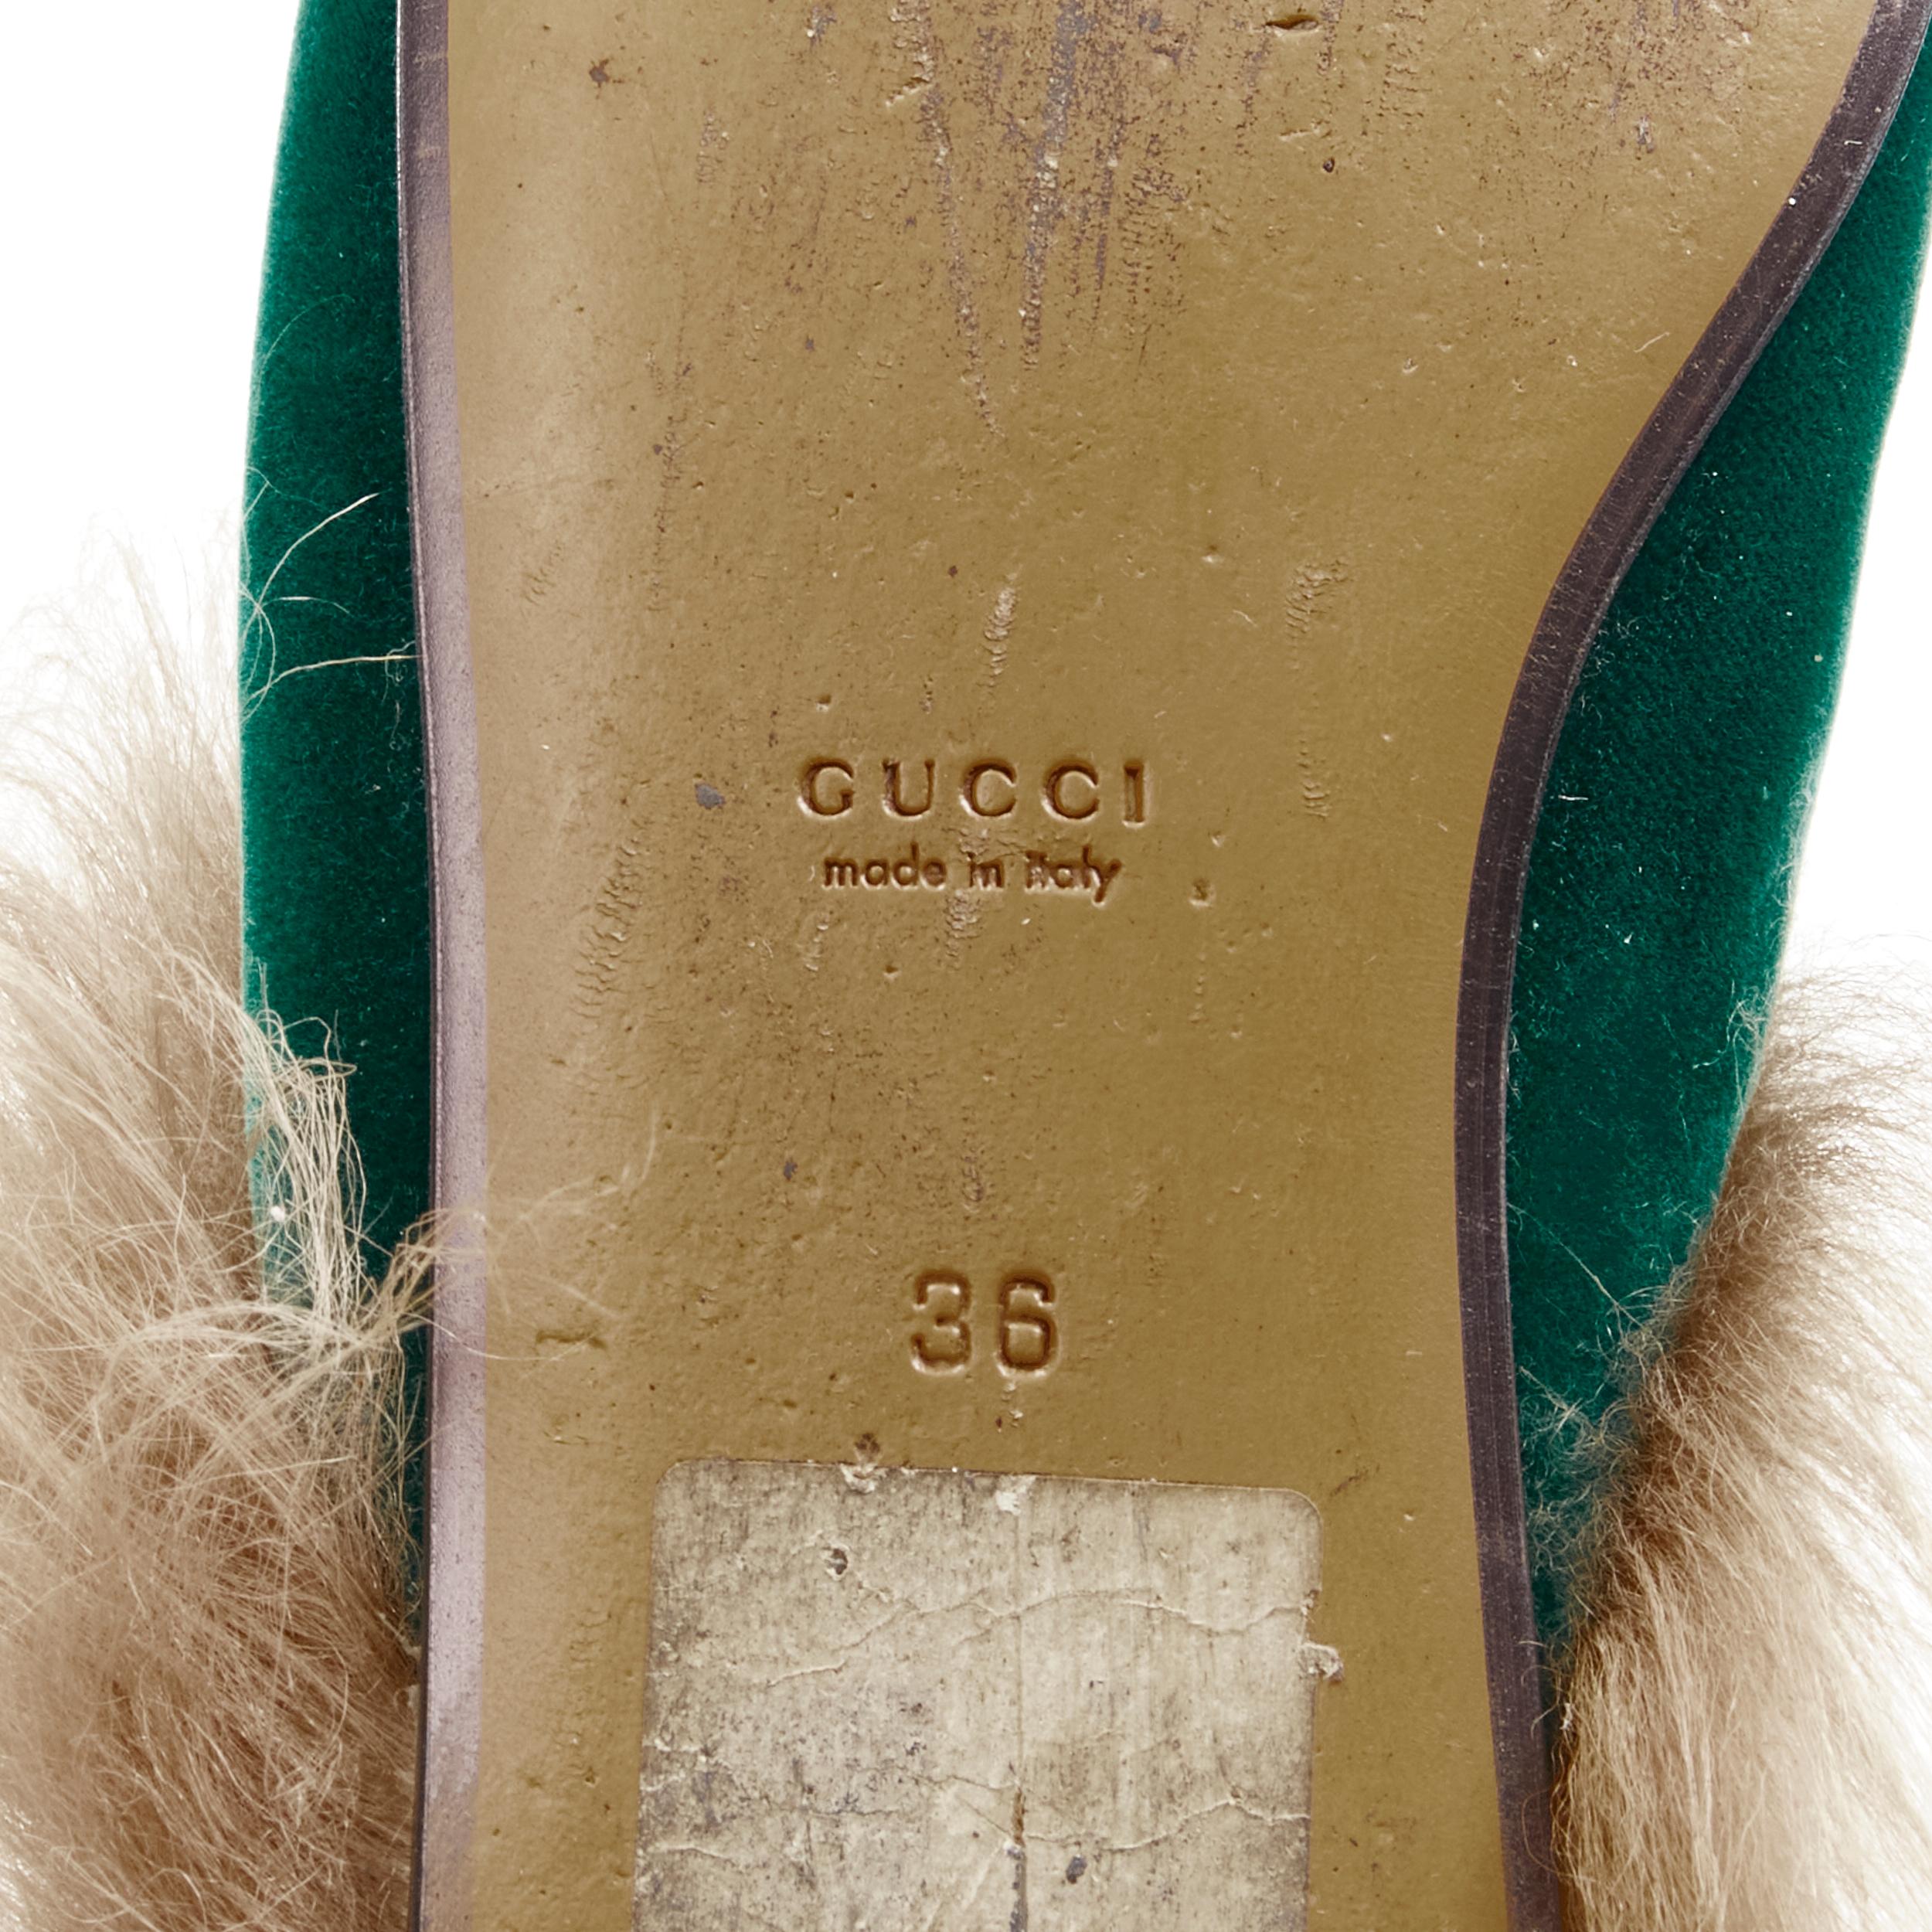 GUCCI Princetown green velvet fur lined gold Horsebit mule loafer EU36 2